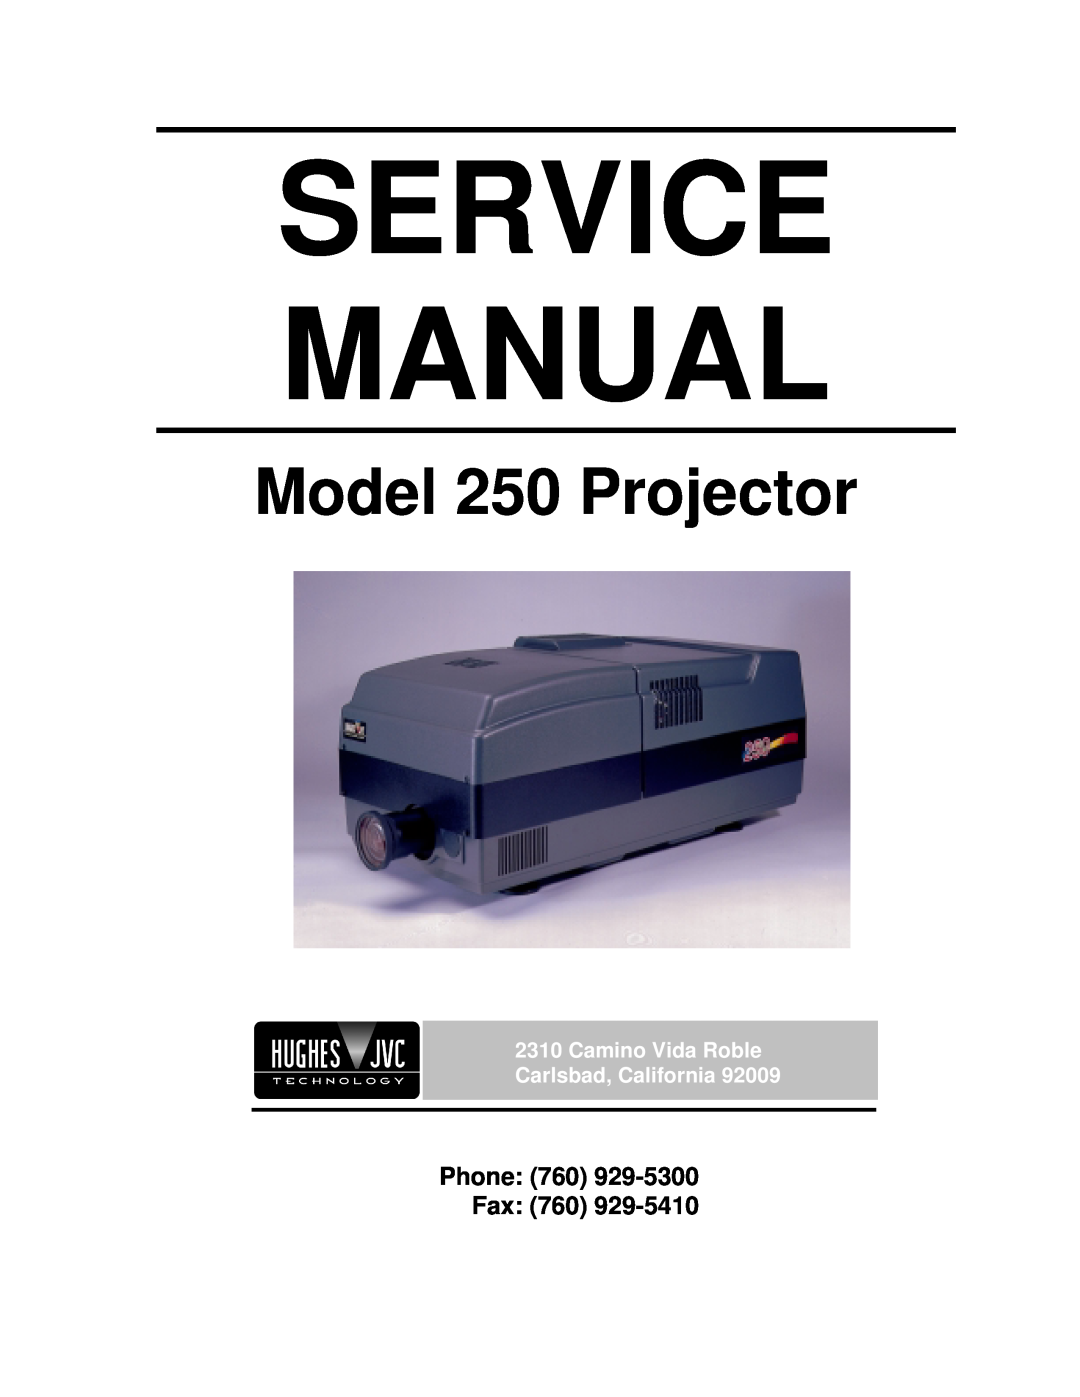 JVC service manual Service Manual, Model 250 Projector, Phone 760 929-5300 Fax 760 